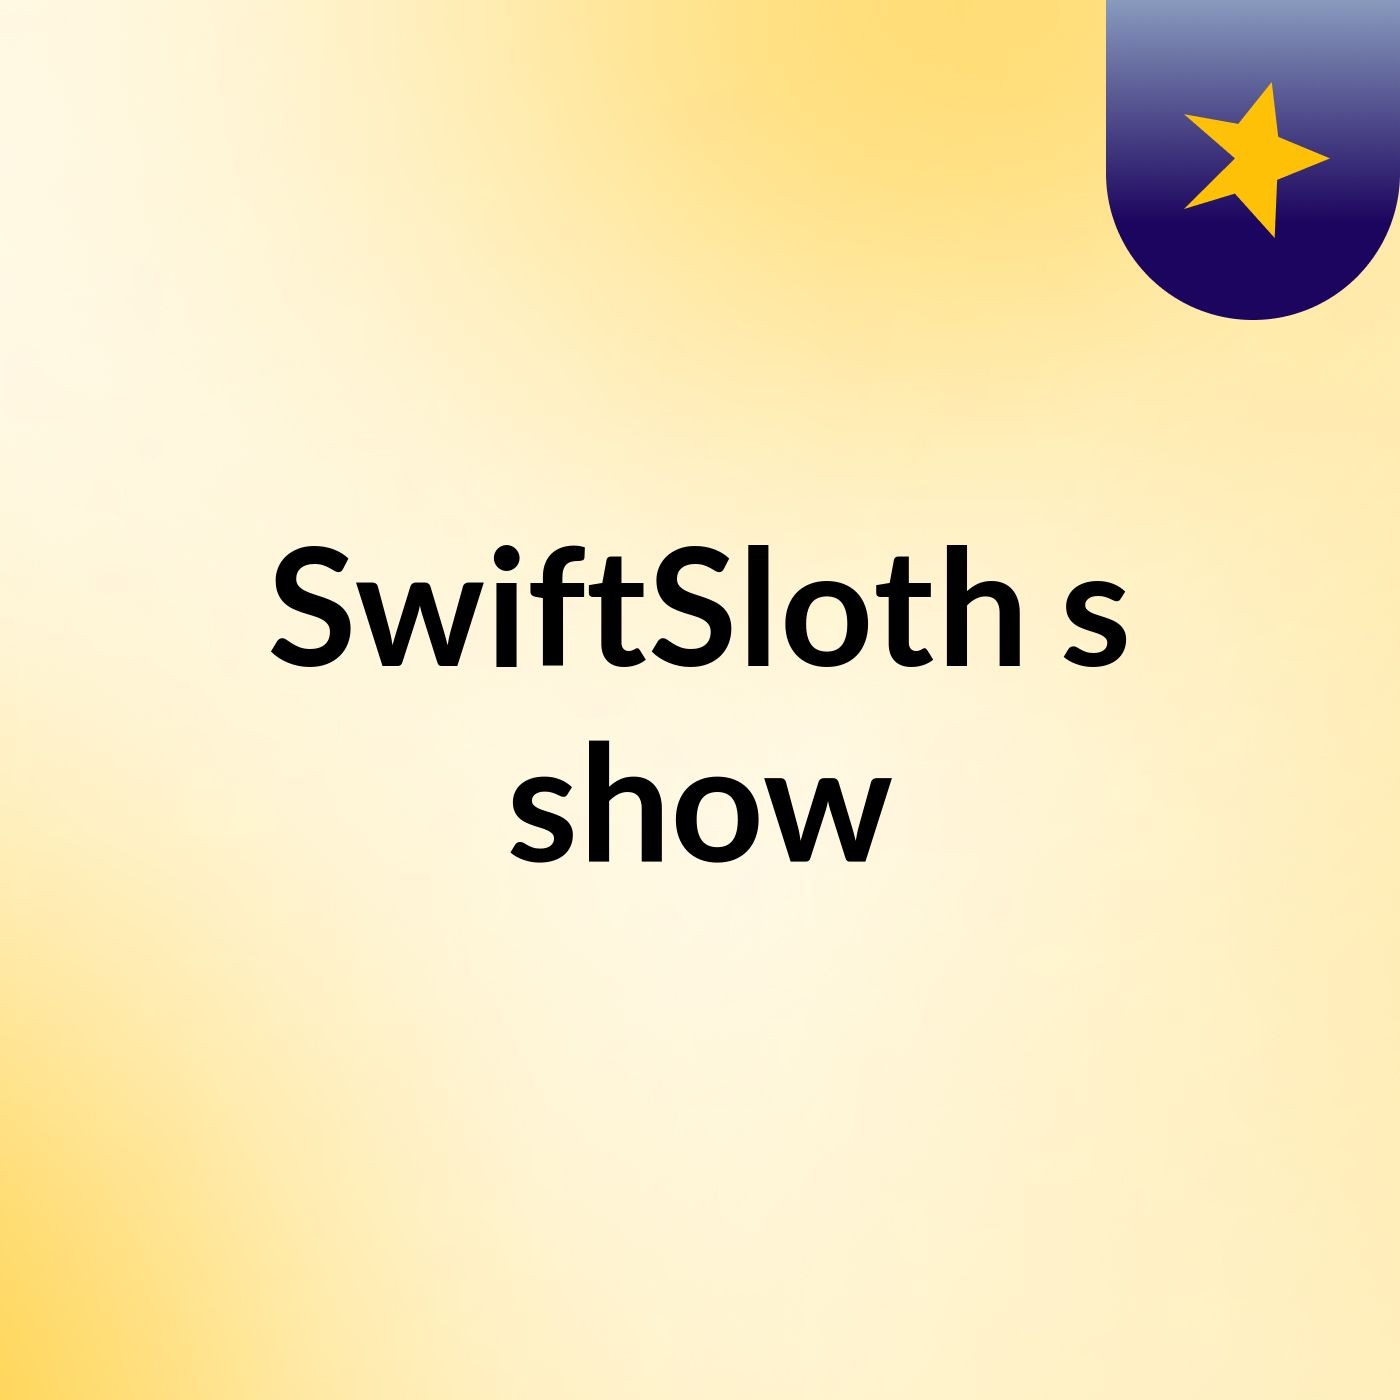 SwiftSloth's show